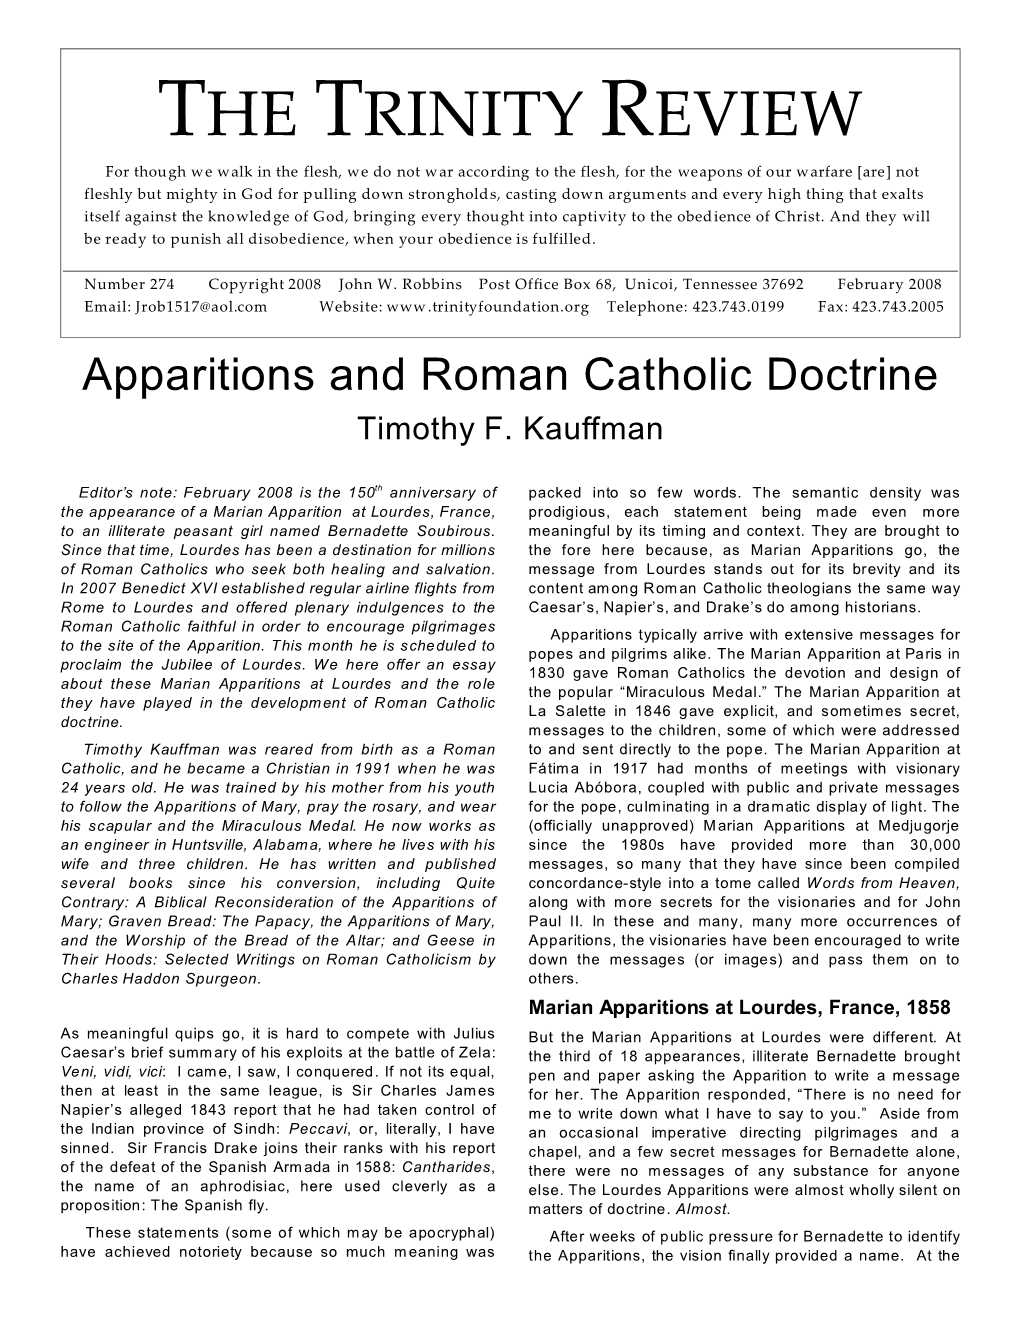 Apparitions and Roman Catholic Doctrine Timothy F